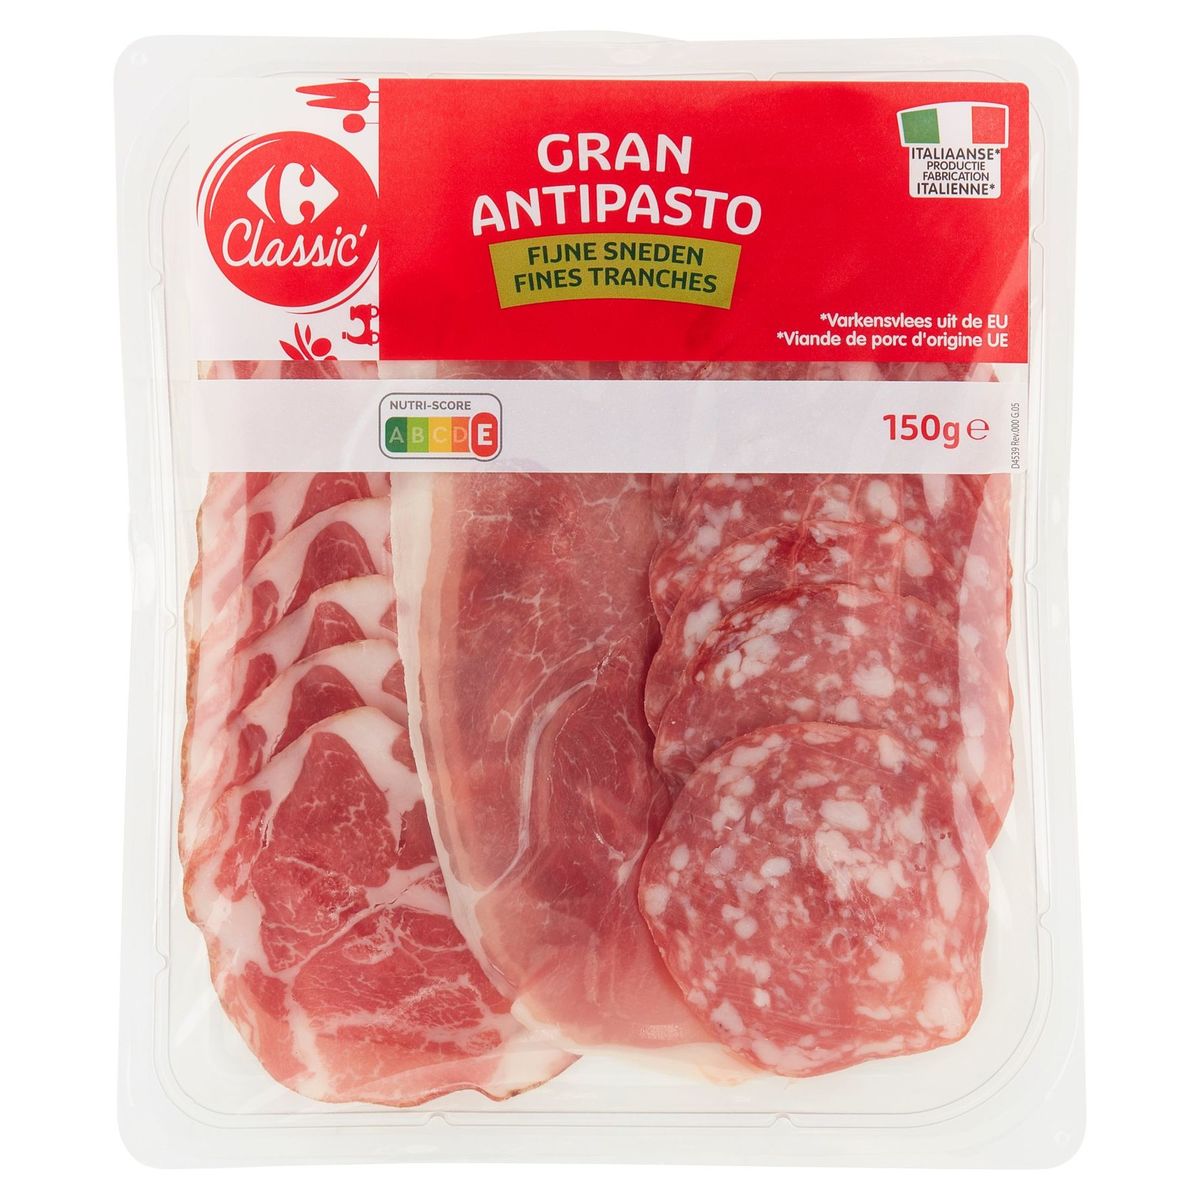 Carrefour Classic' Gran Antipasto Fines Tranches 150 g